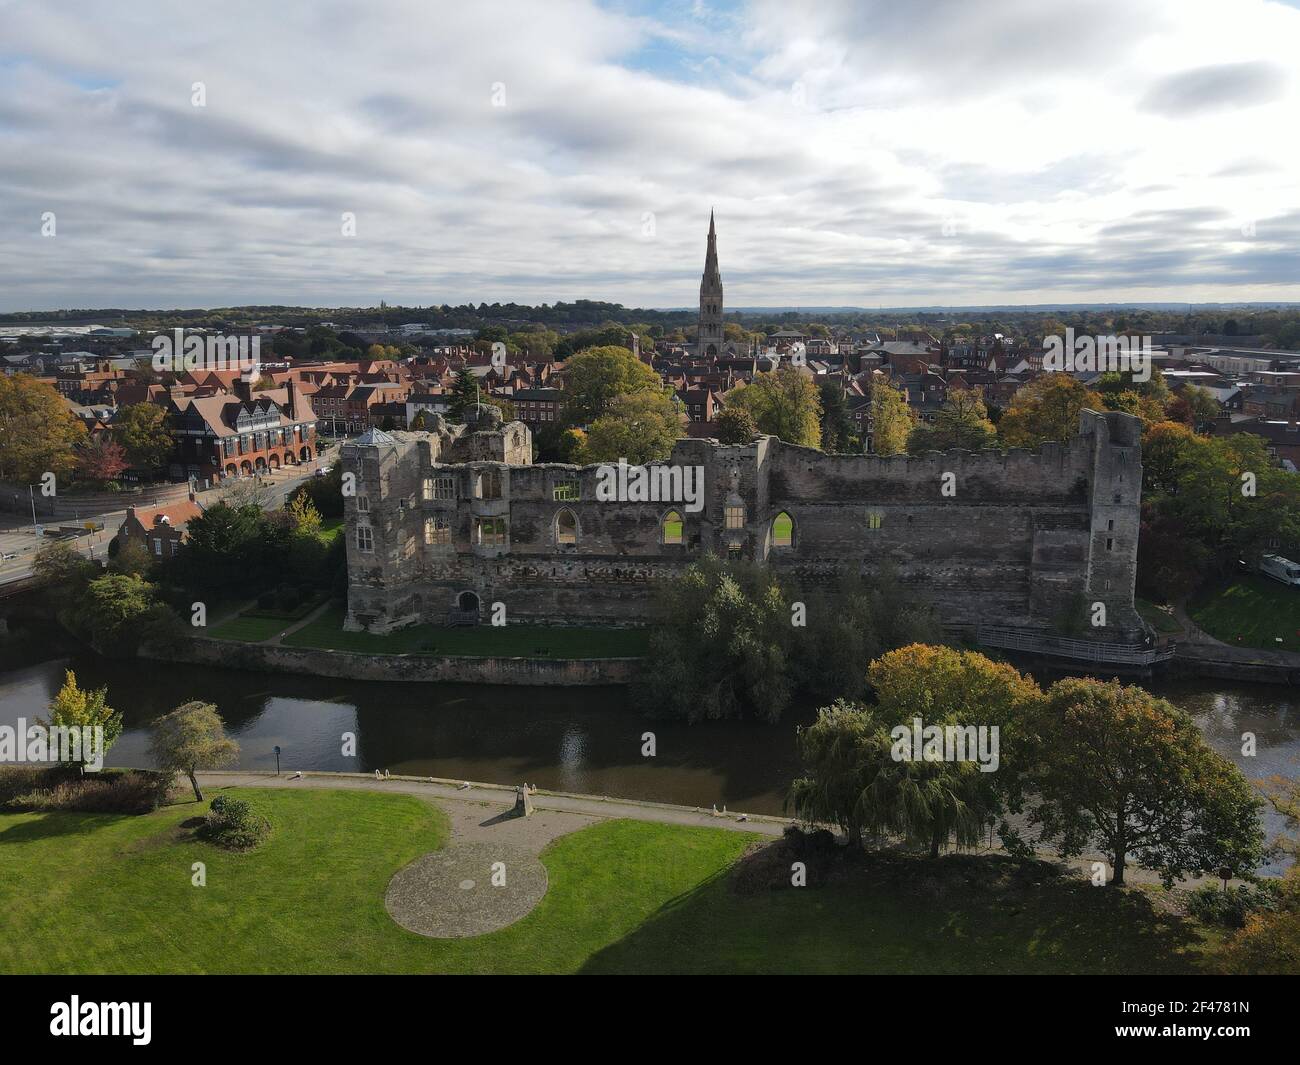 Newark su Trent Castle England immagine aerea. Foto Stock